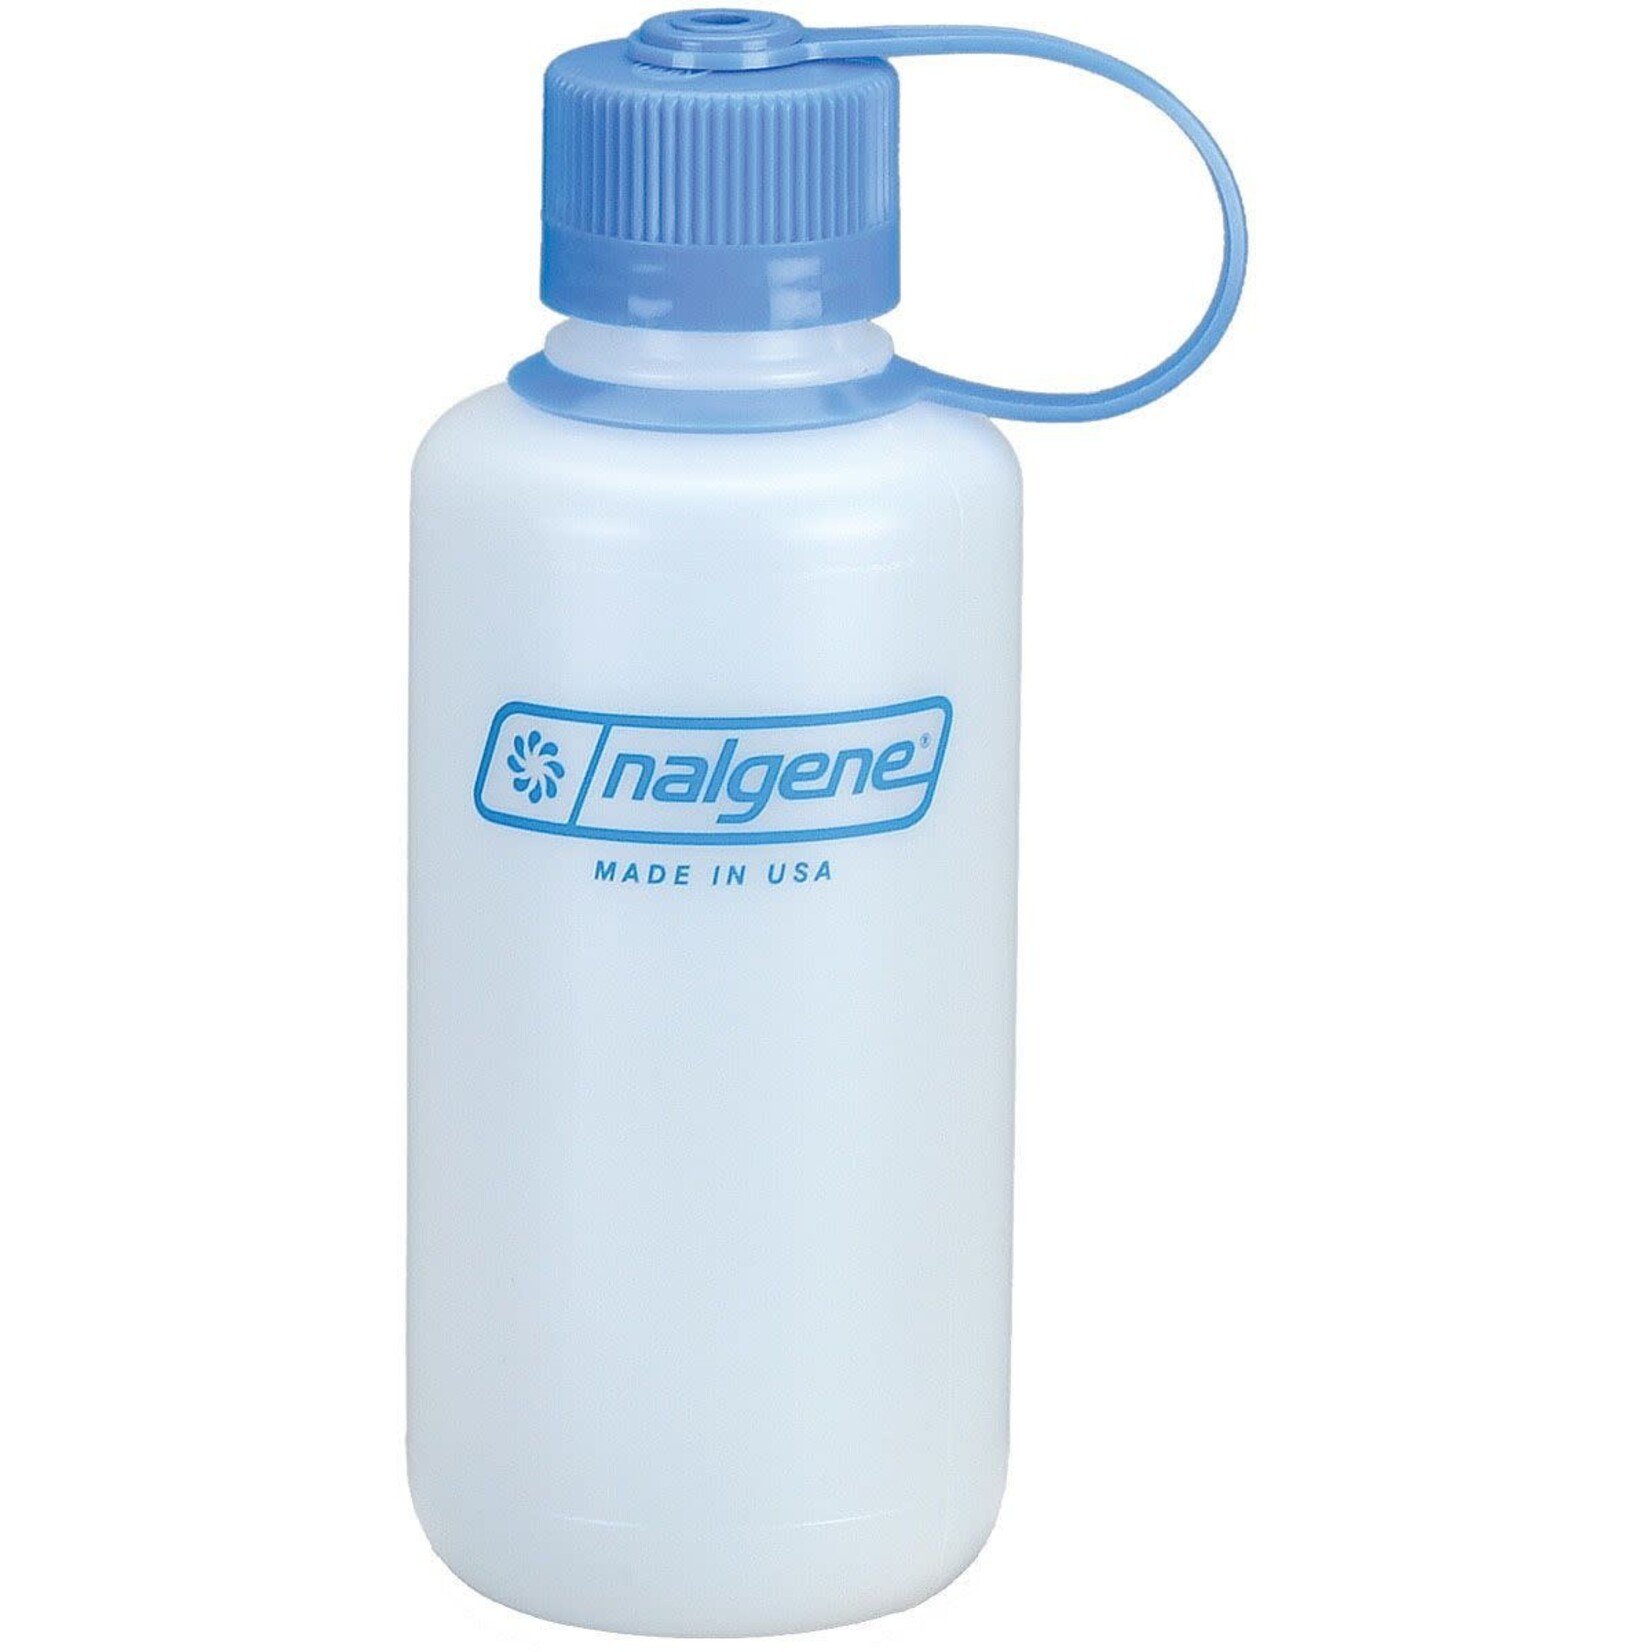 NALGENE Nalgene Ultralite Narrowmouth HDPE 16oz Water Bottle